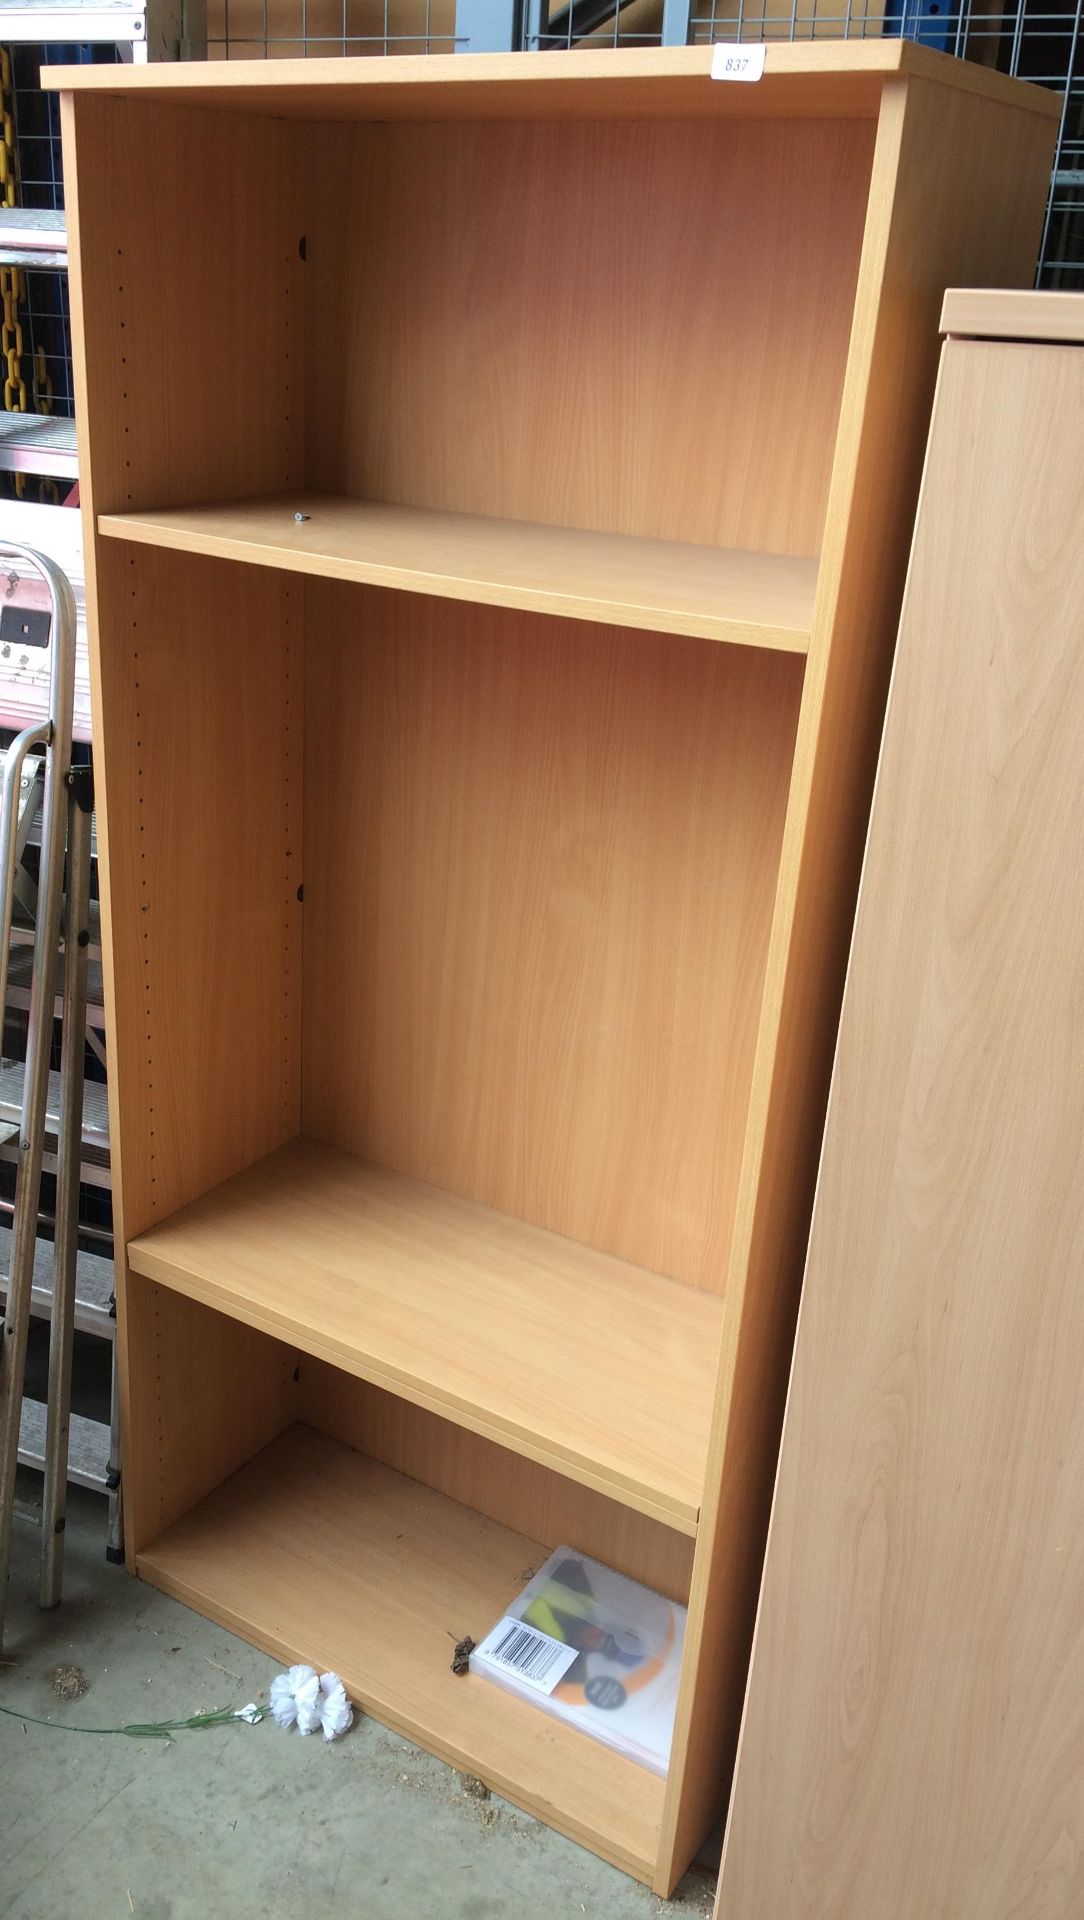 A light oak finish three shelf open bookcase